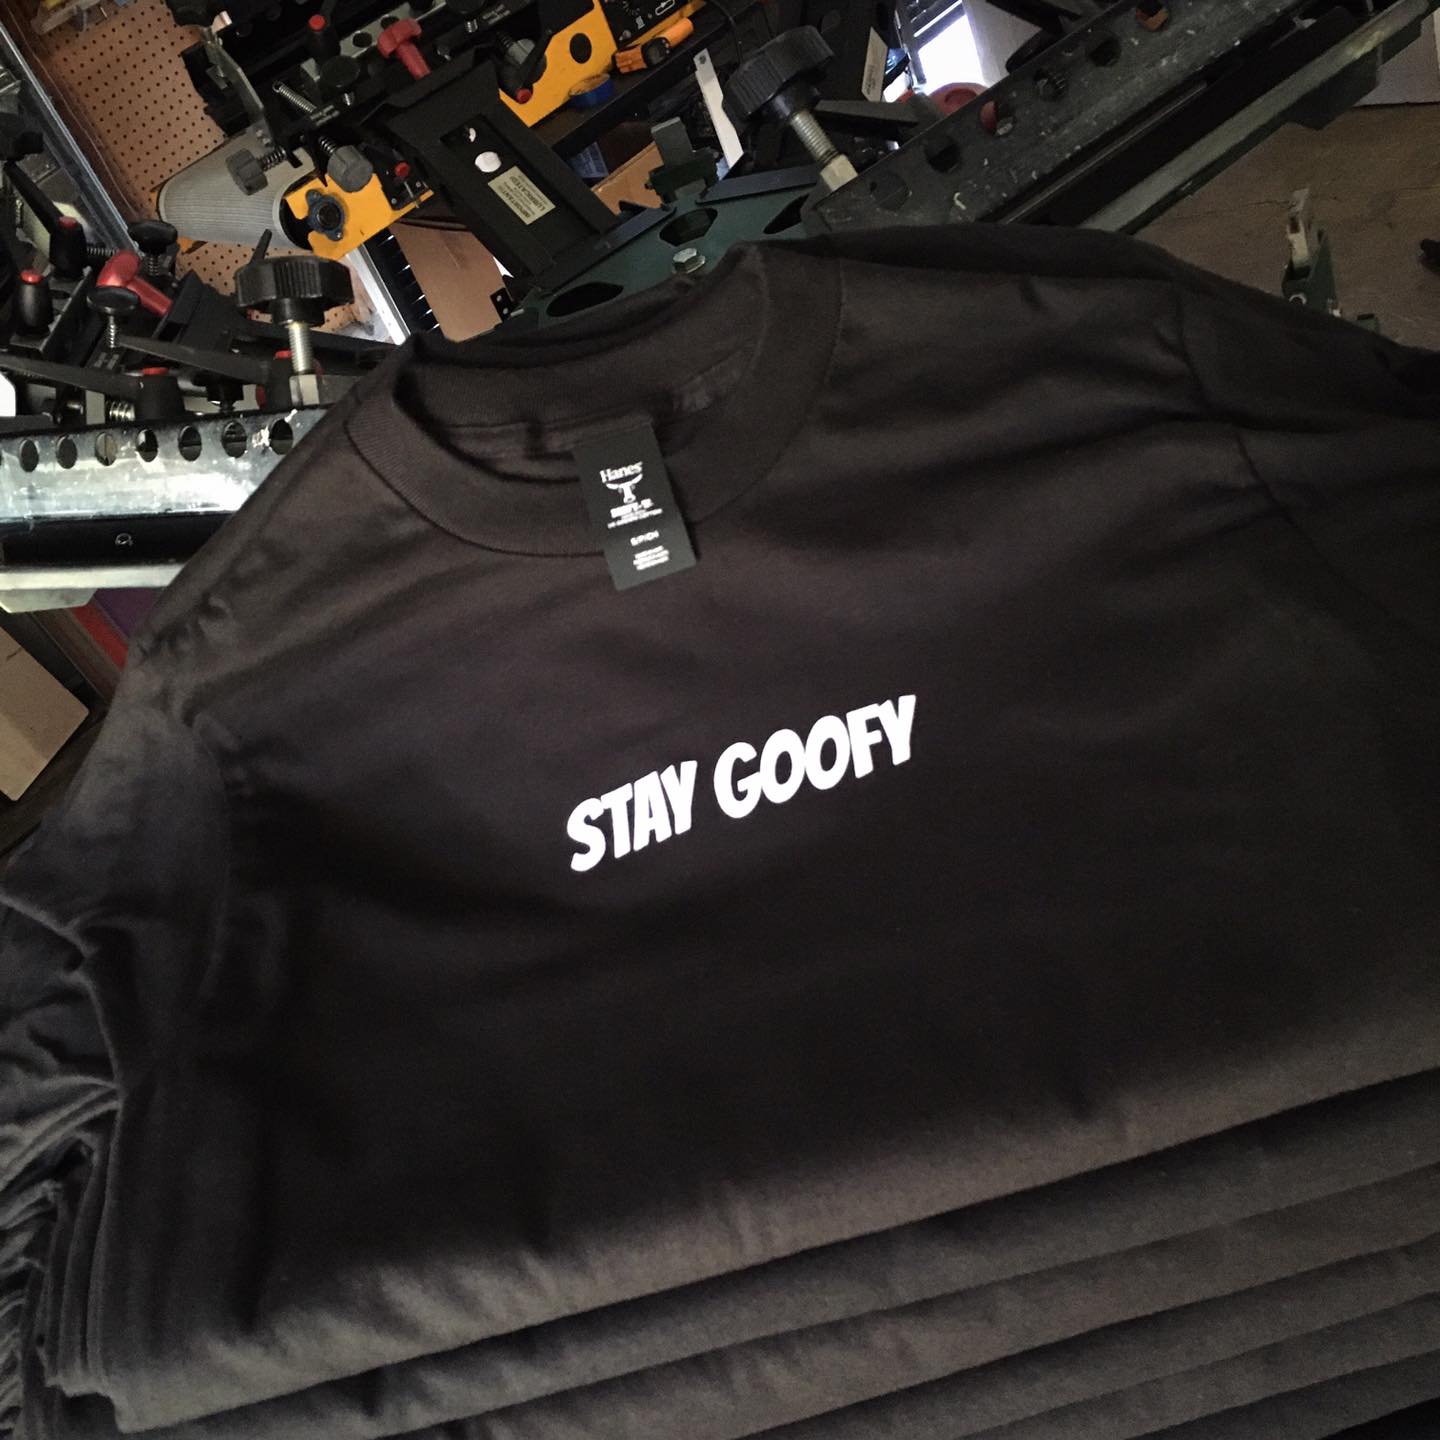 Stay Goofy screen printed t-shirts Richmond Virginia